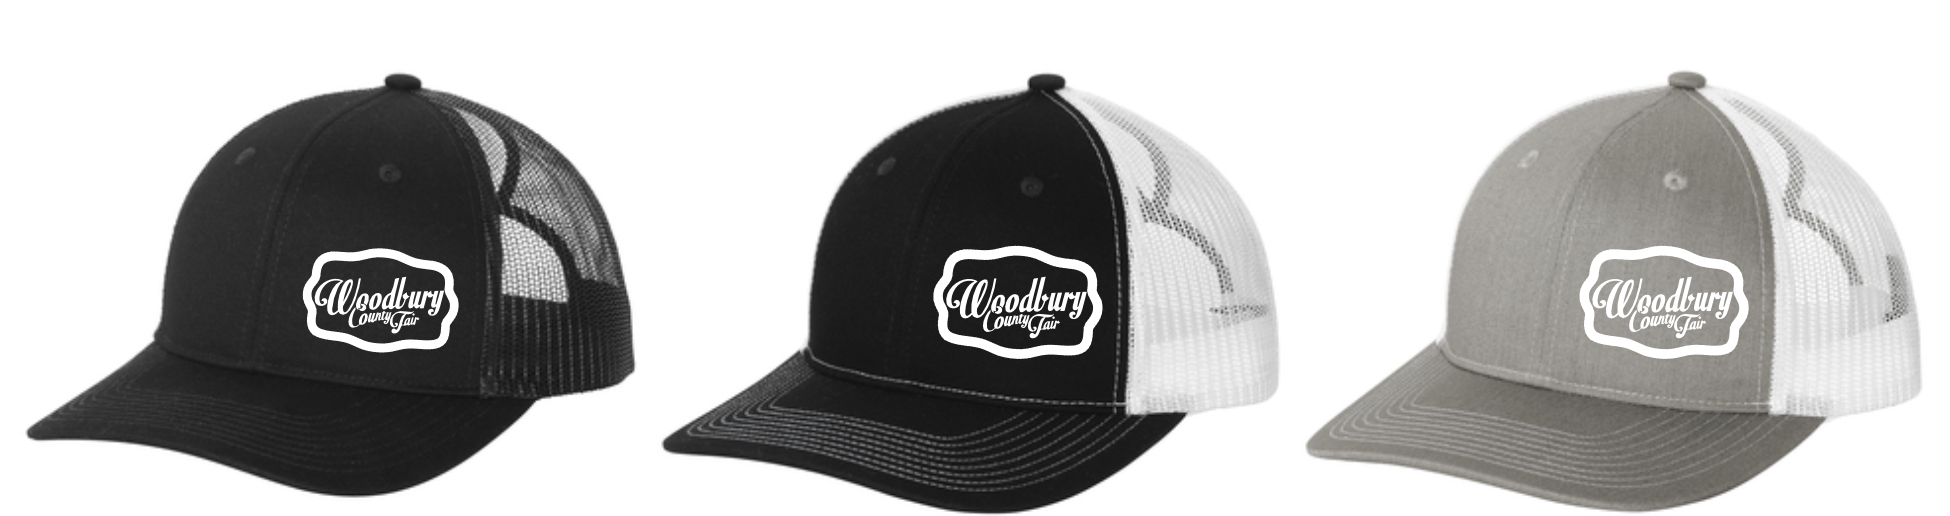 Woodbury County Fair - Port Authority Snapback Ponytail Cap (+ colors)